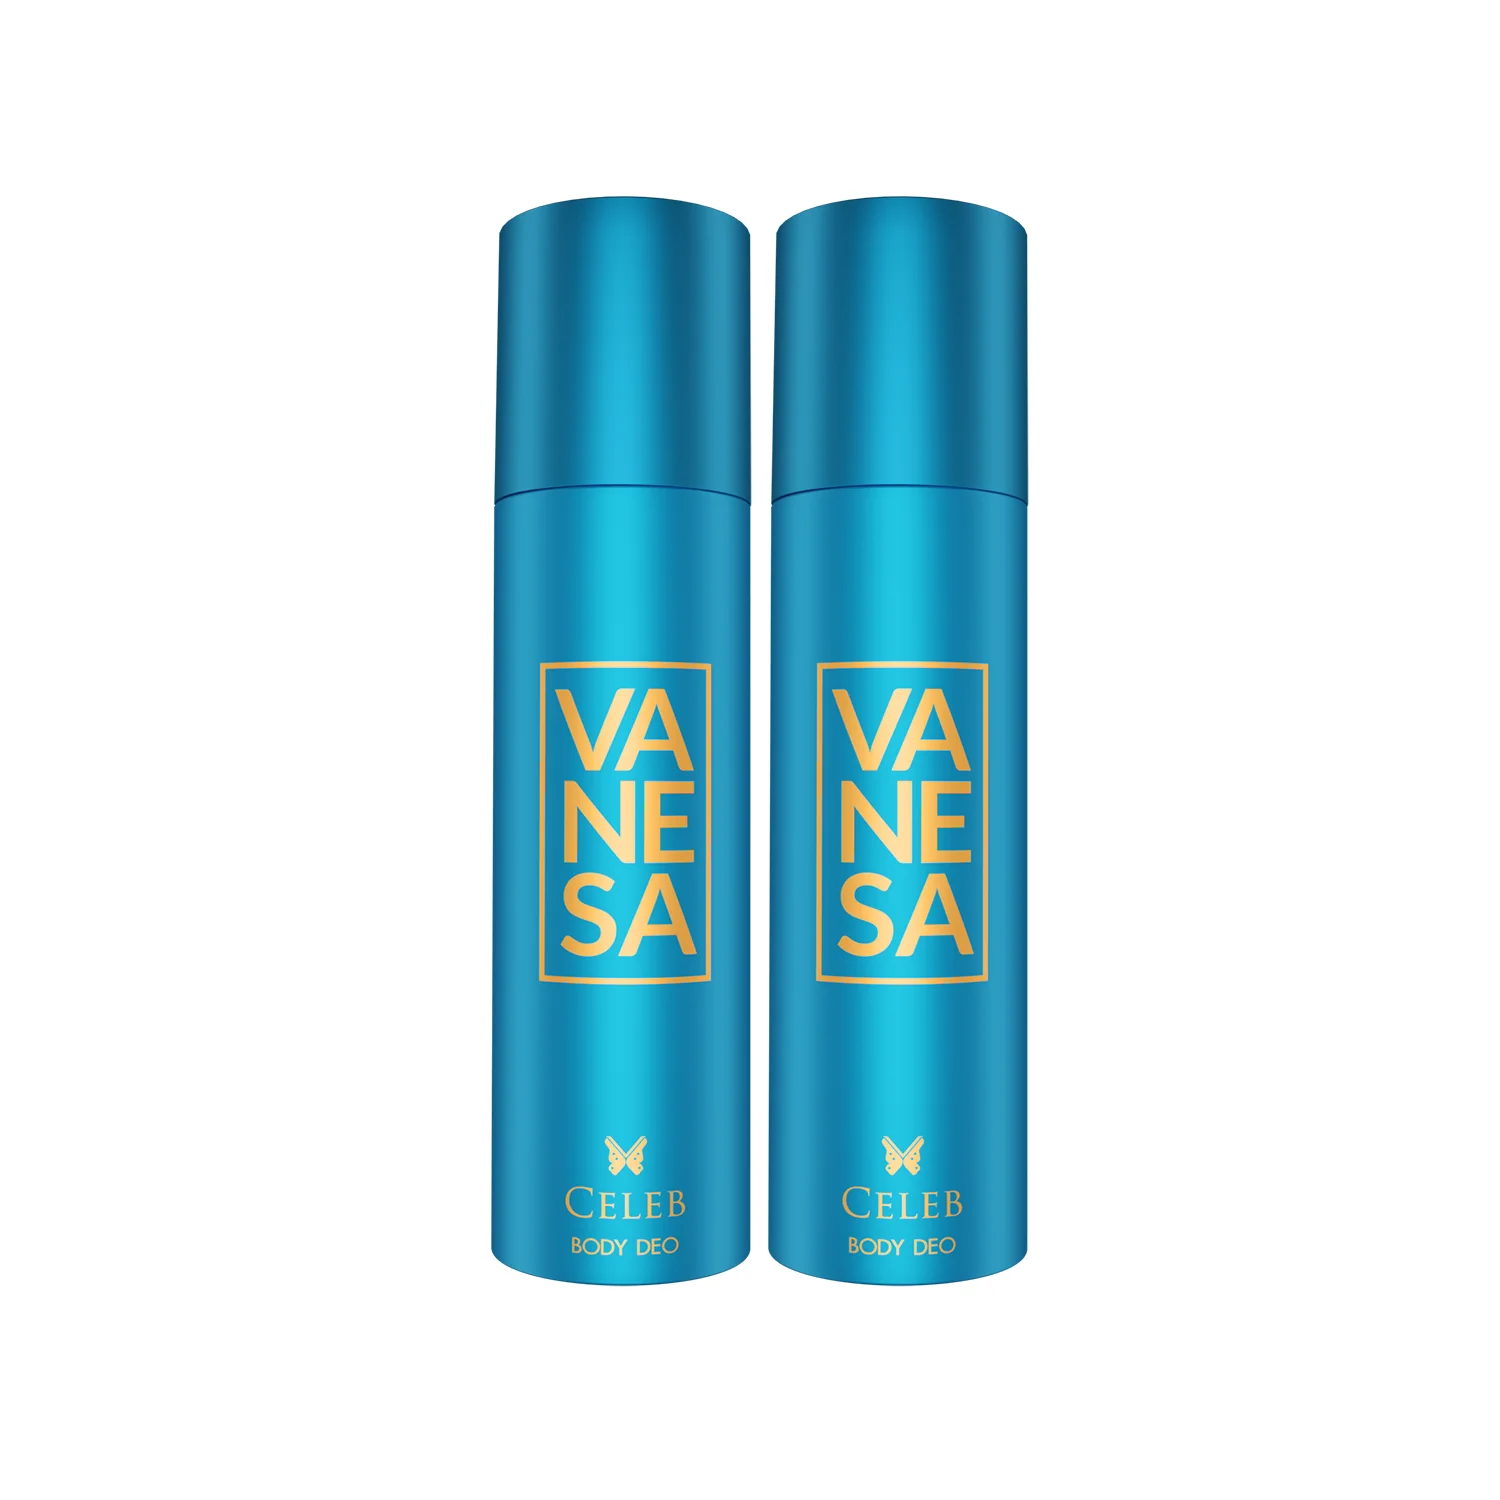 Vanesa Body Deodorant For Long Lasting Fragrance